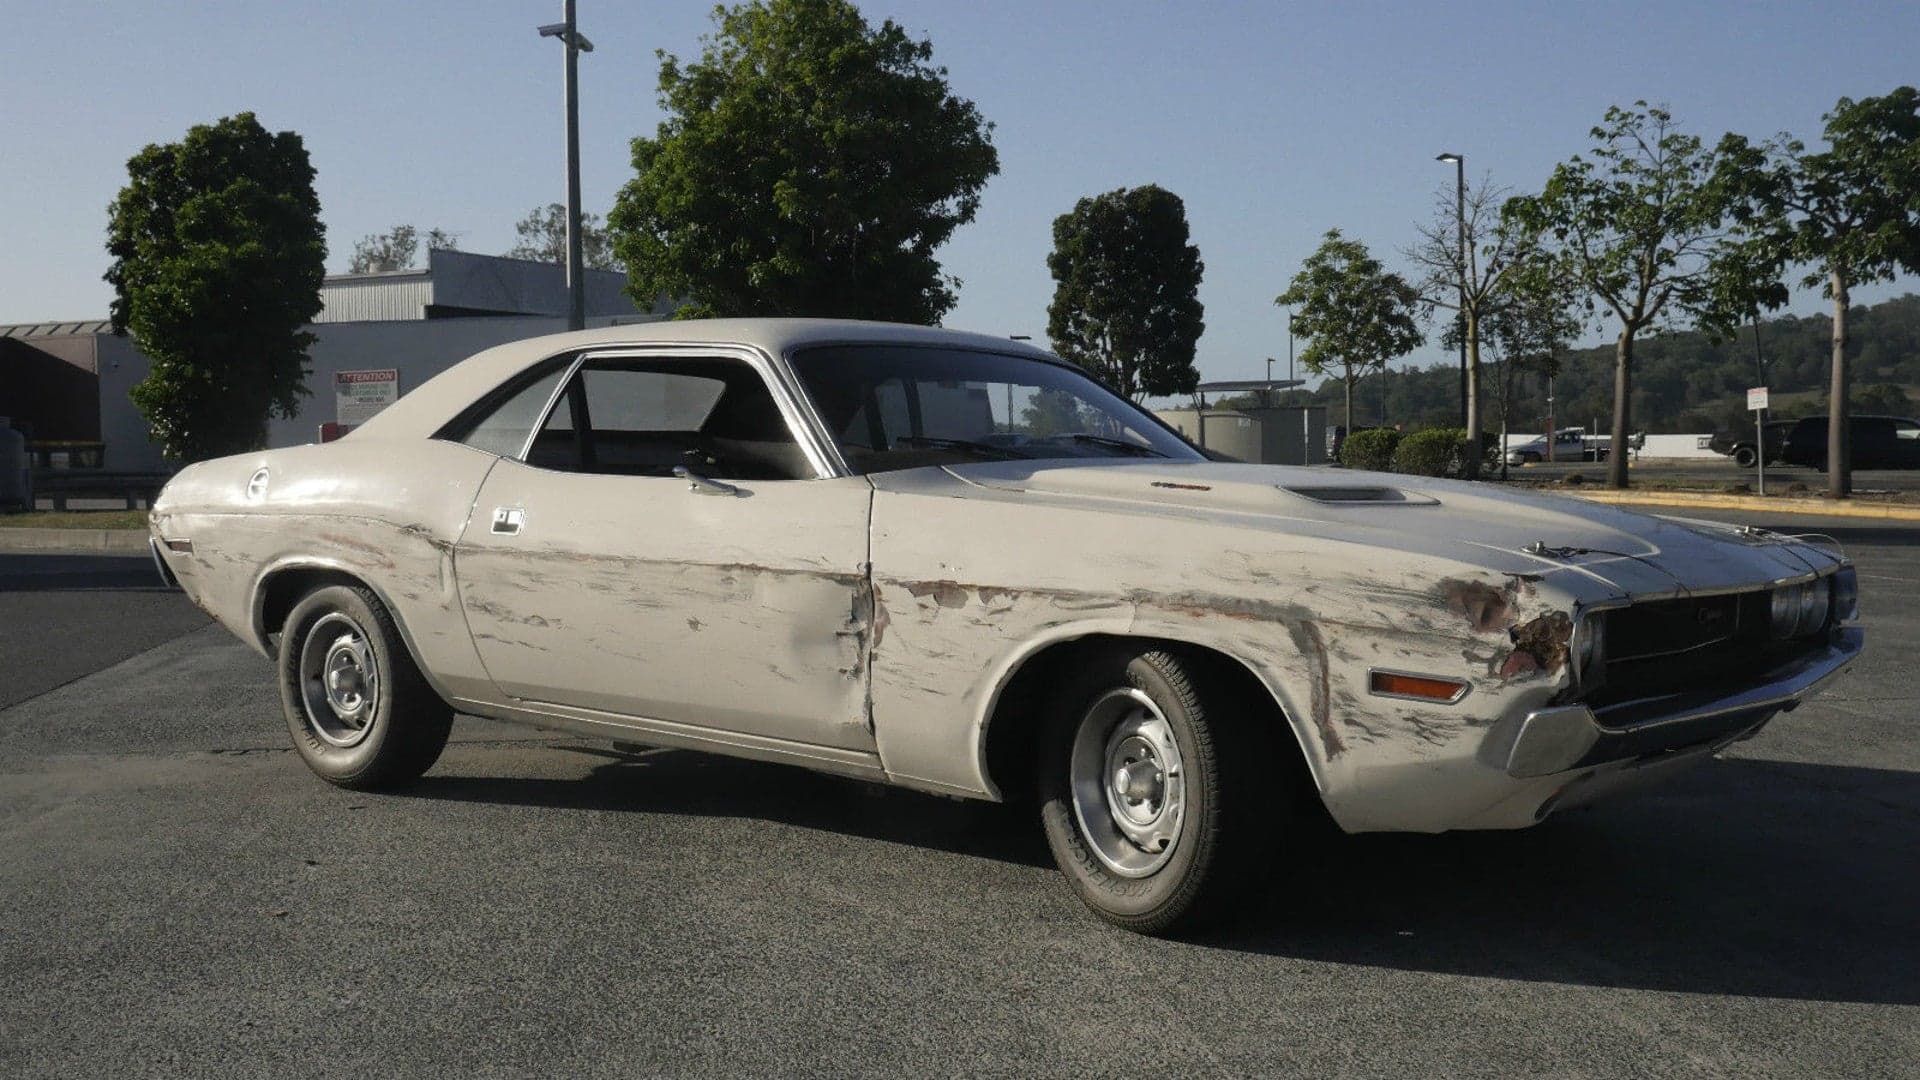 Garage-Find 1971 Dodge Challenger from Tarantino’s Death Proof  Up for Sale on eBay